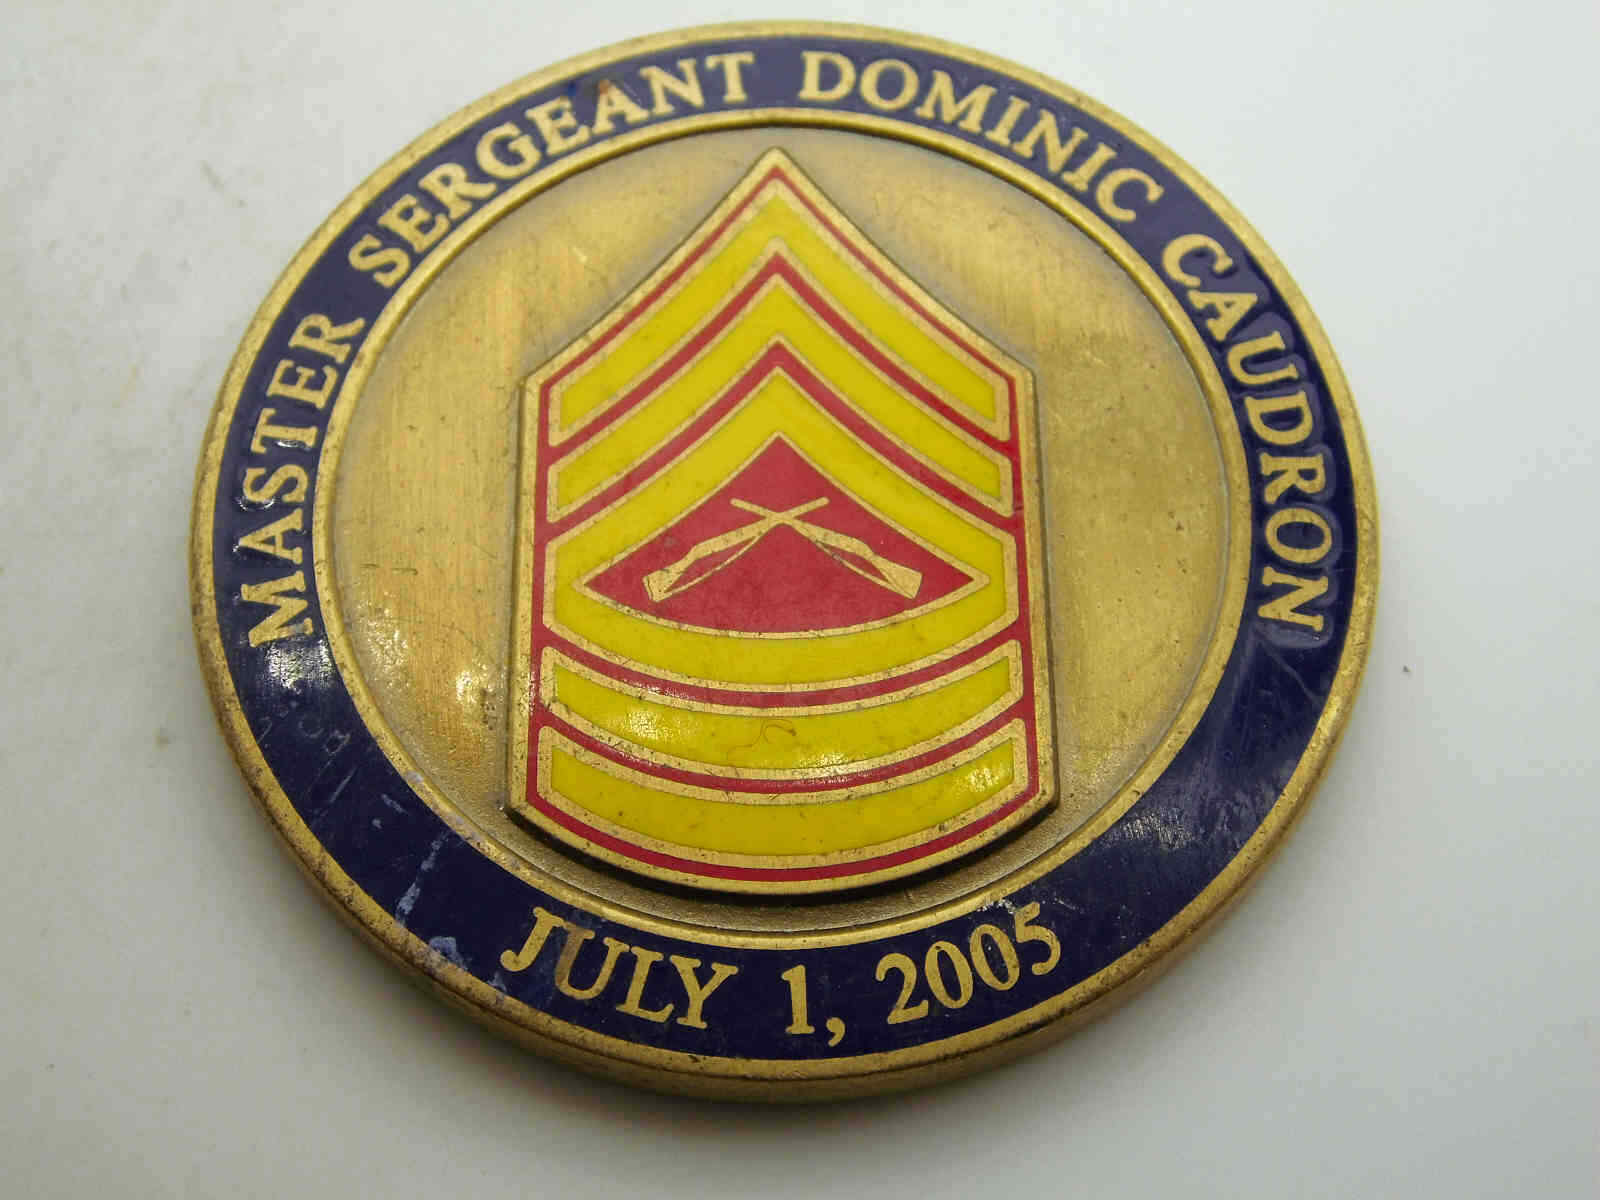 USMC MASTER SERGEANT DOMINIC CAUDRON CHALLENGE COIN